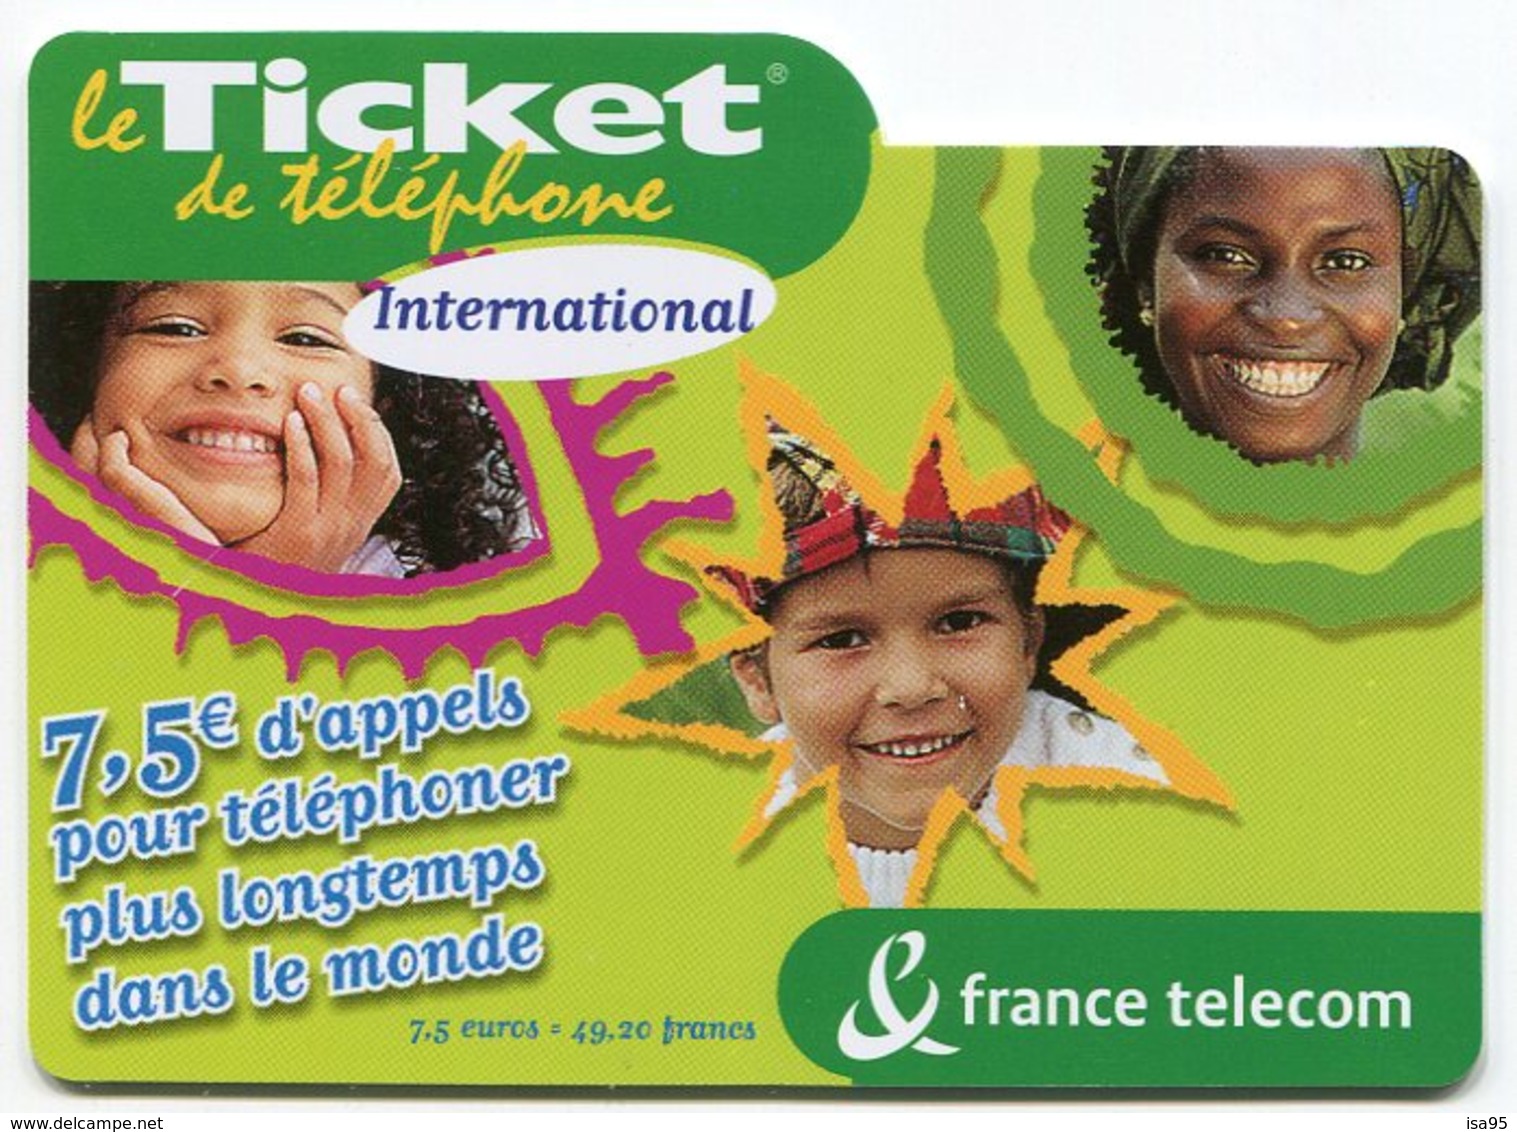 TELECARTE-LE TICKET DE TELEPHONE INTERNATIONAL-2004-7.5€ - Tickets FT